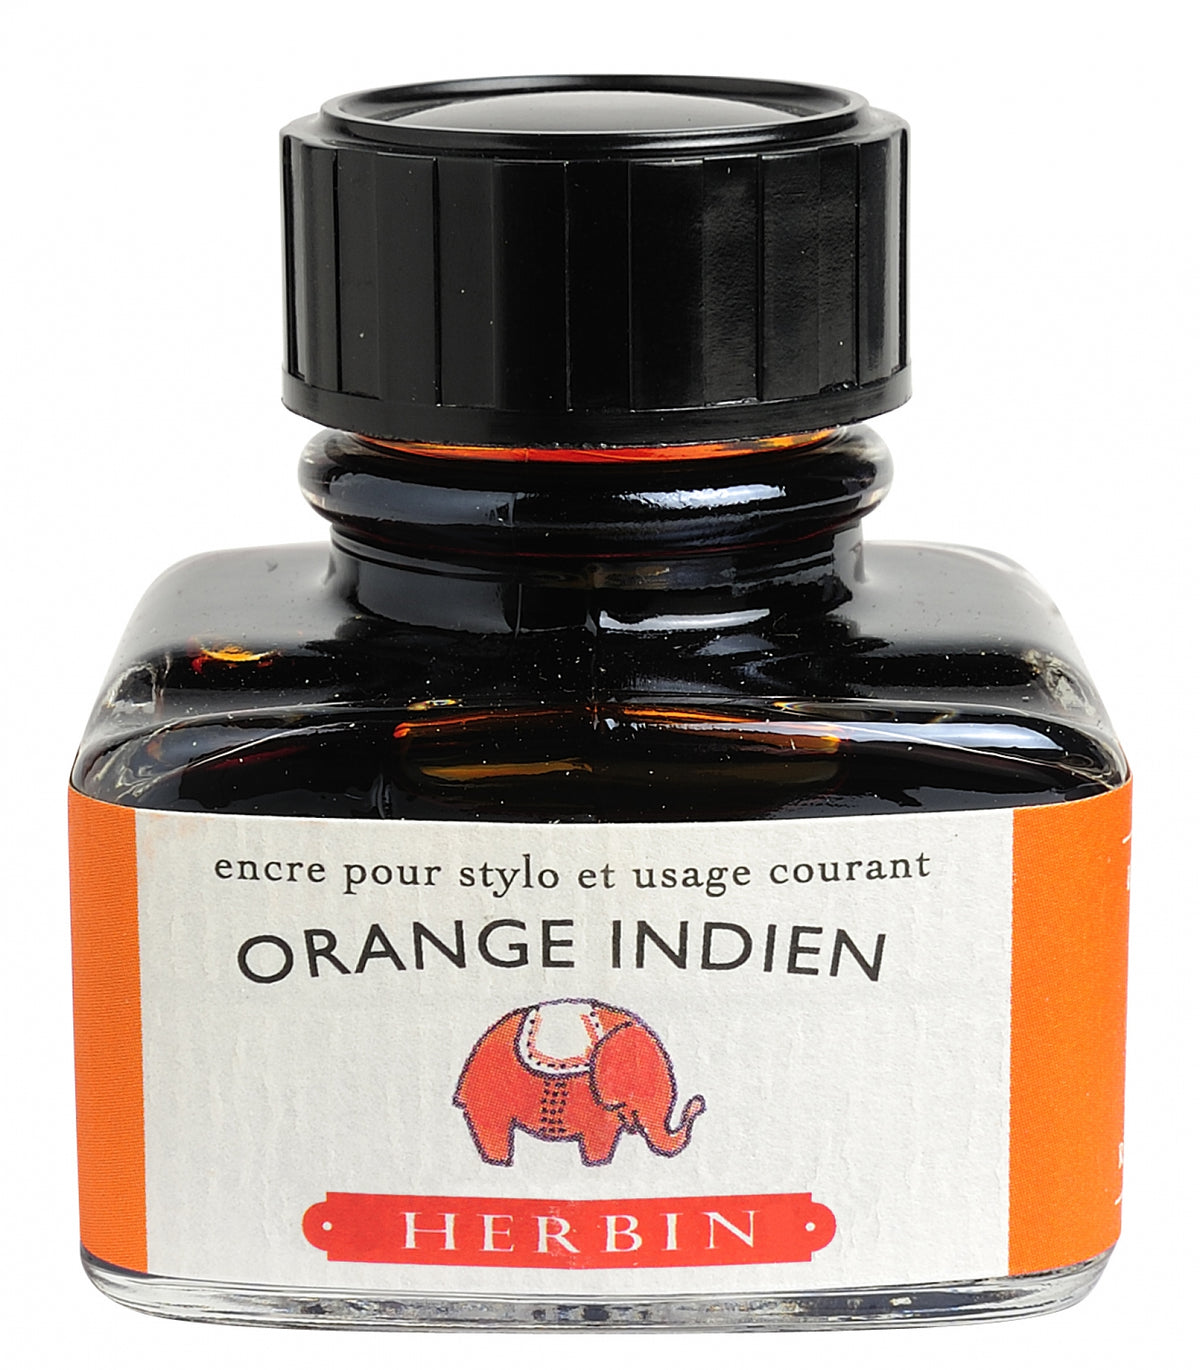 J Herbin Orange Indien